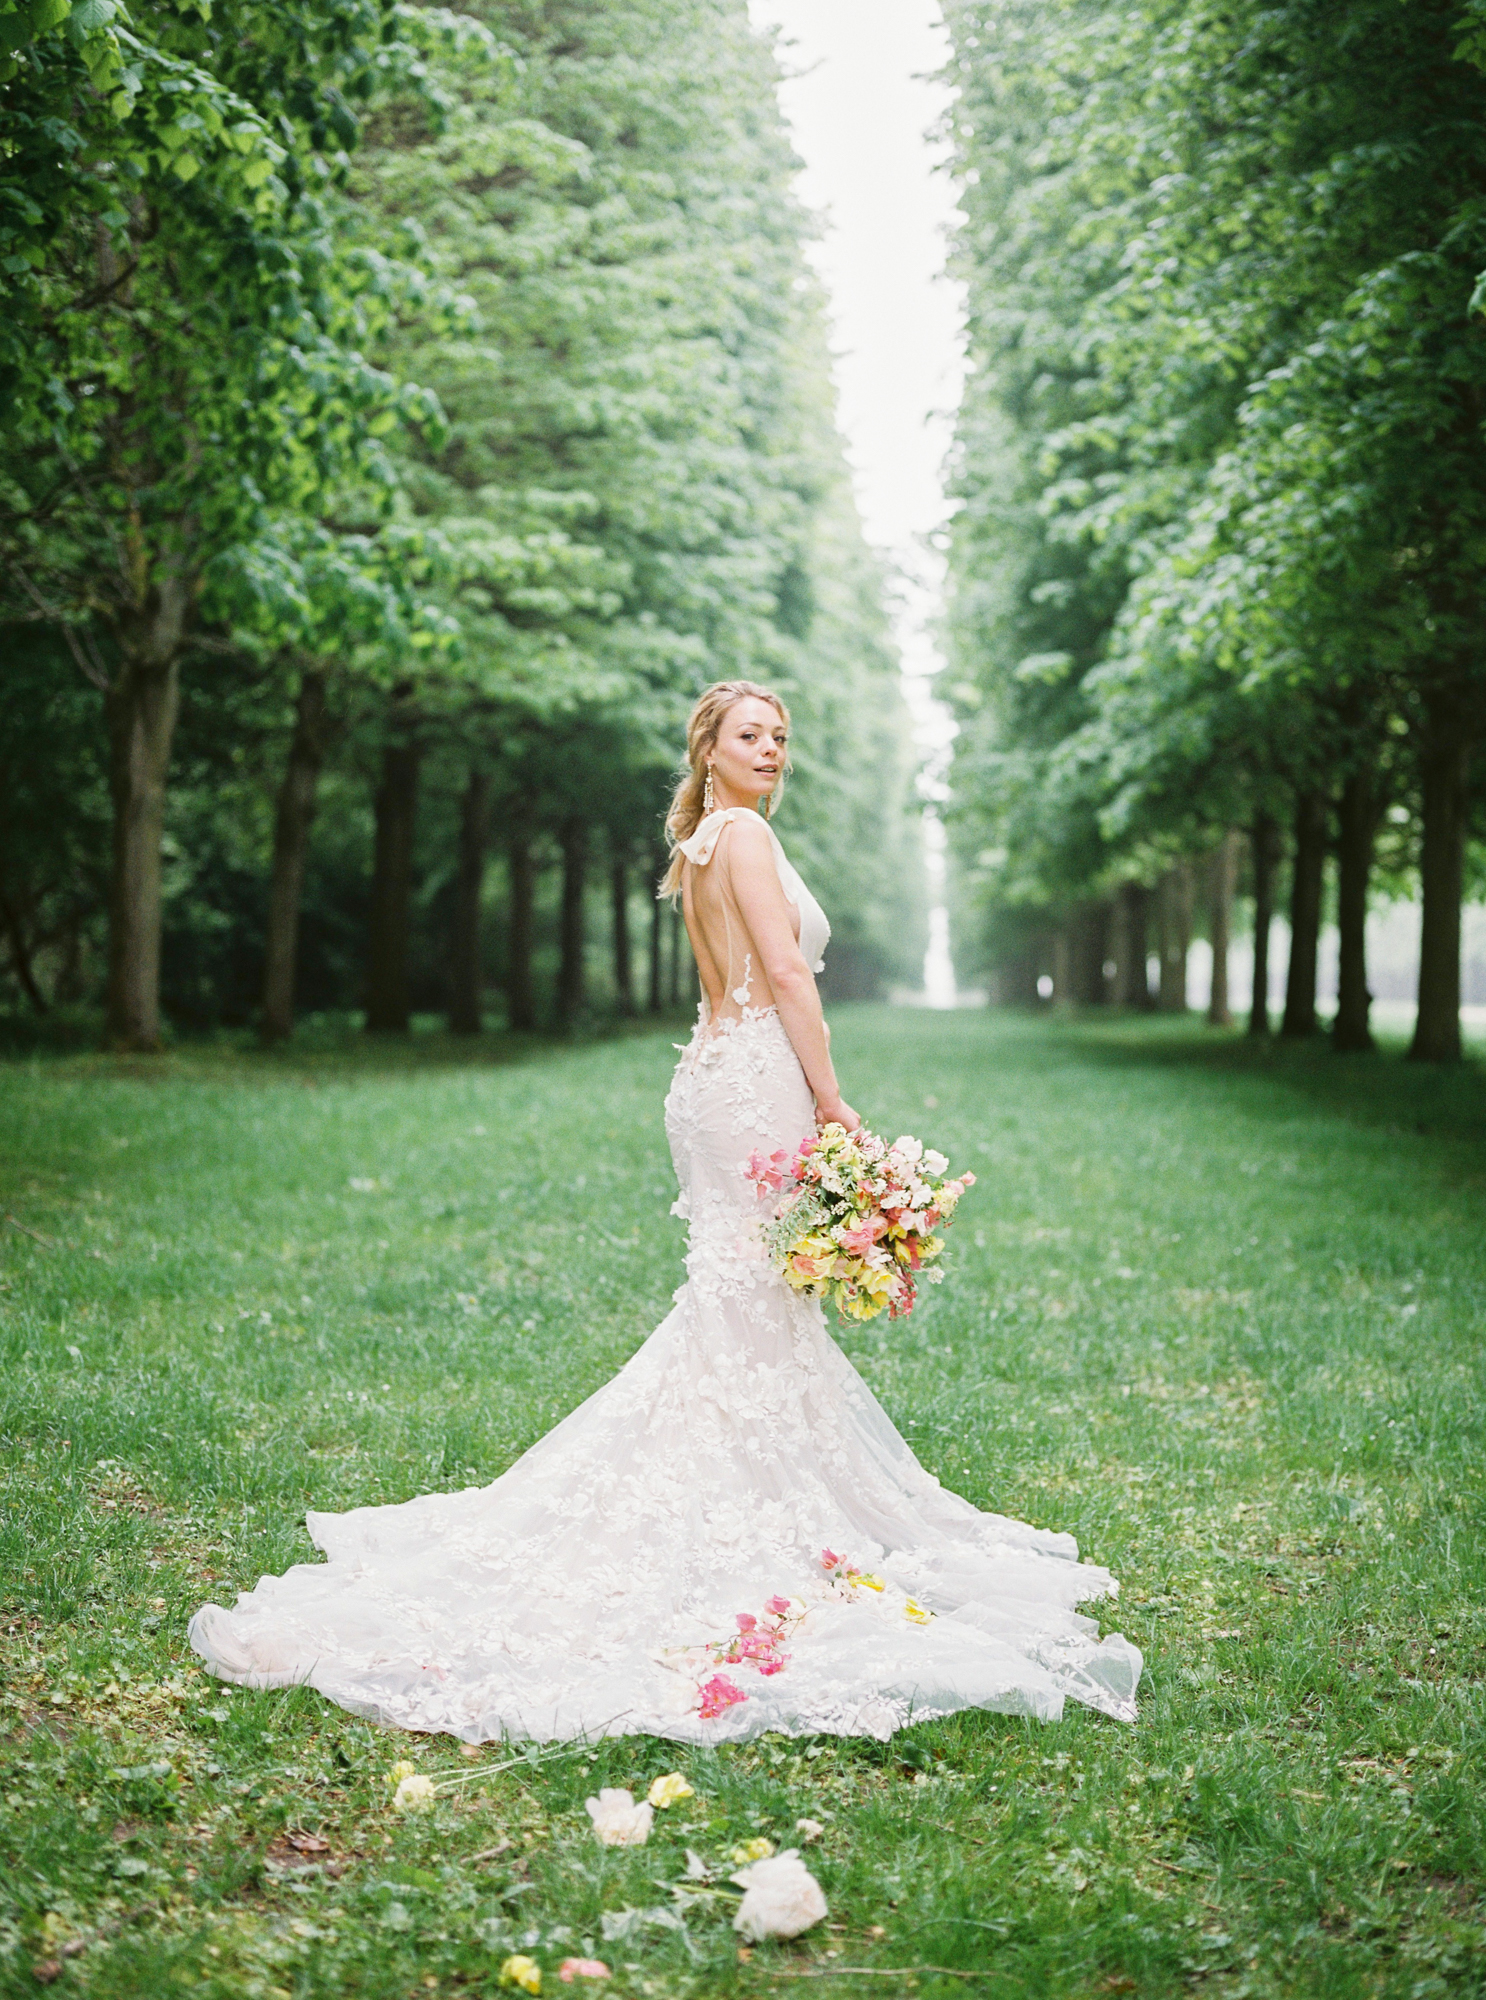 travellur_photoshoot__summer_in_versailles_wedding_flowers_bridal_luxe_shoot_floral_france_gardens.jpg